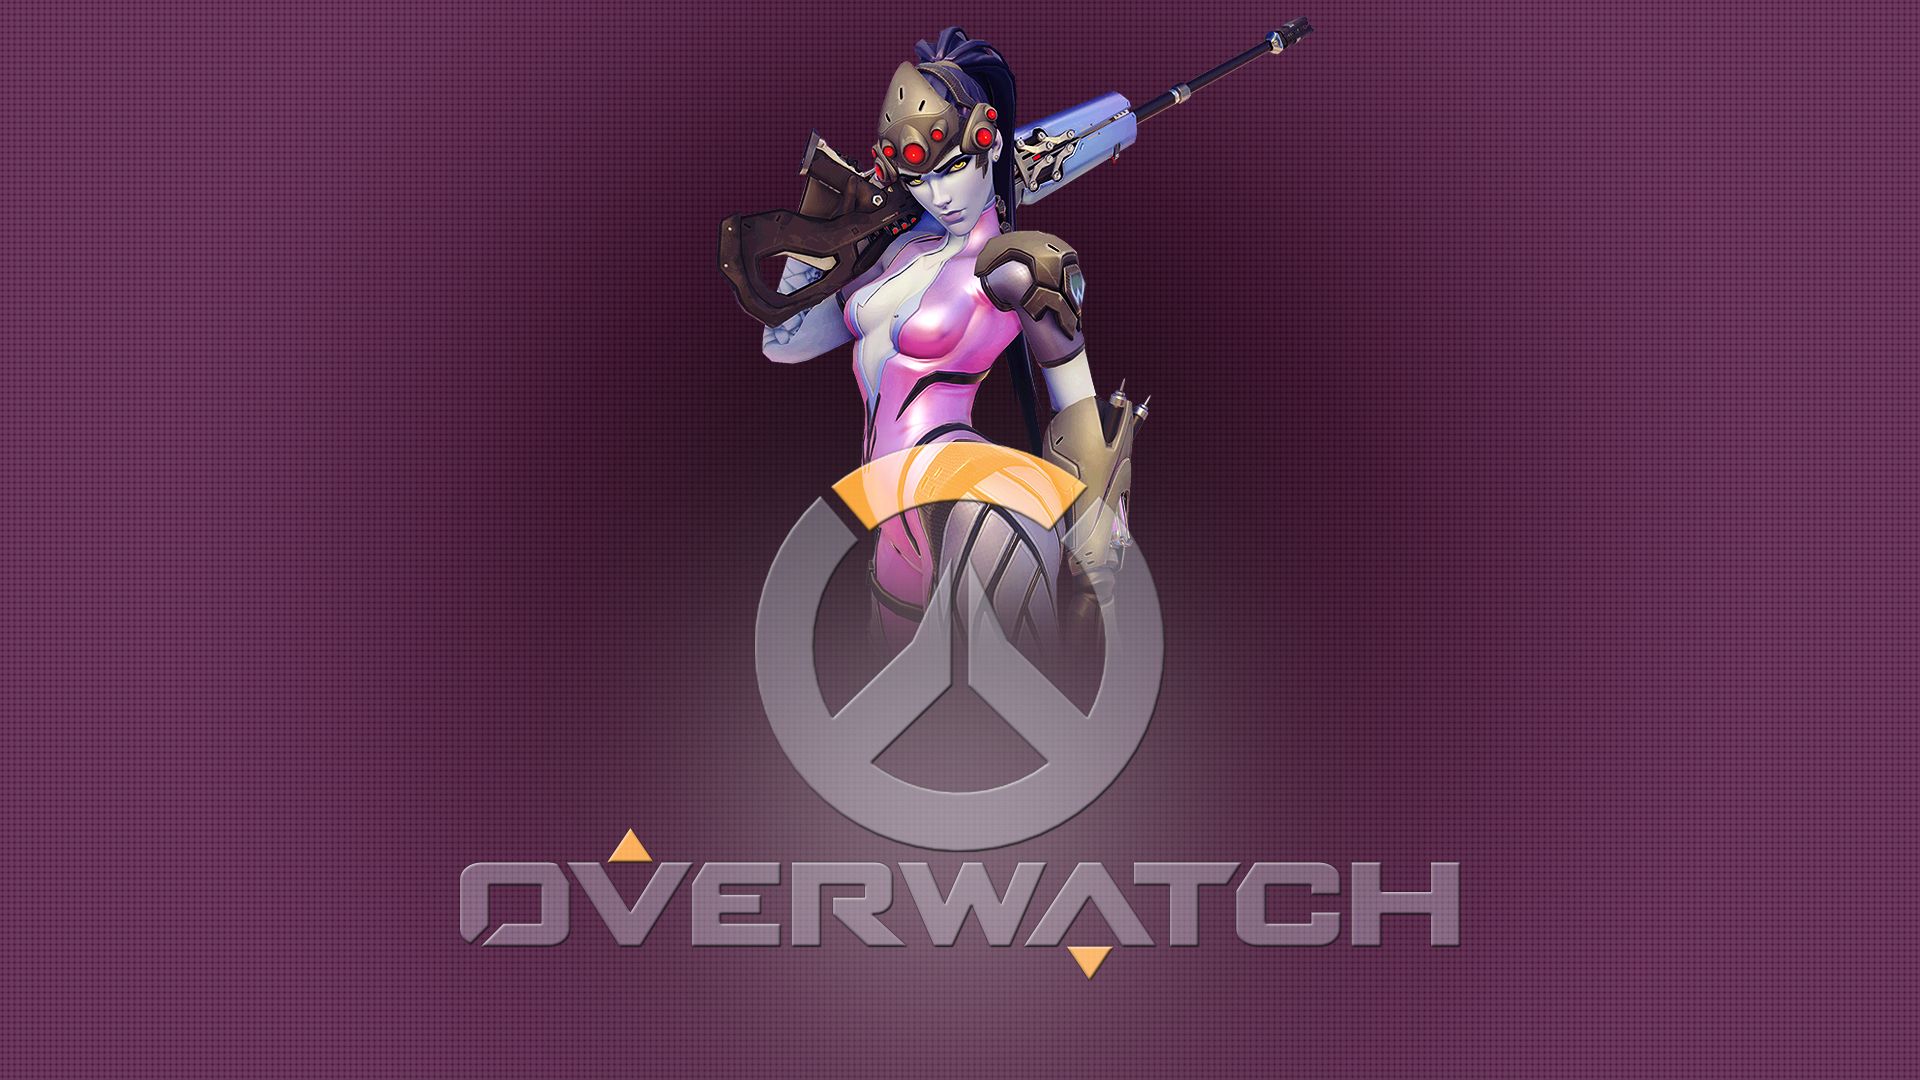 HD wallpaper: Overwatch, Blizzard Entertainment, Widowmaker (Overwatch),  Tracer (Overwatch)